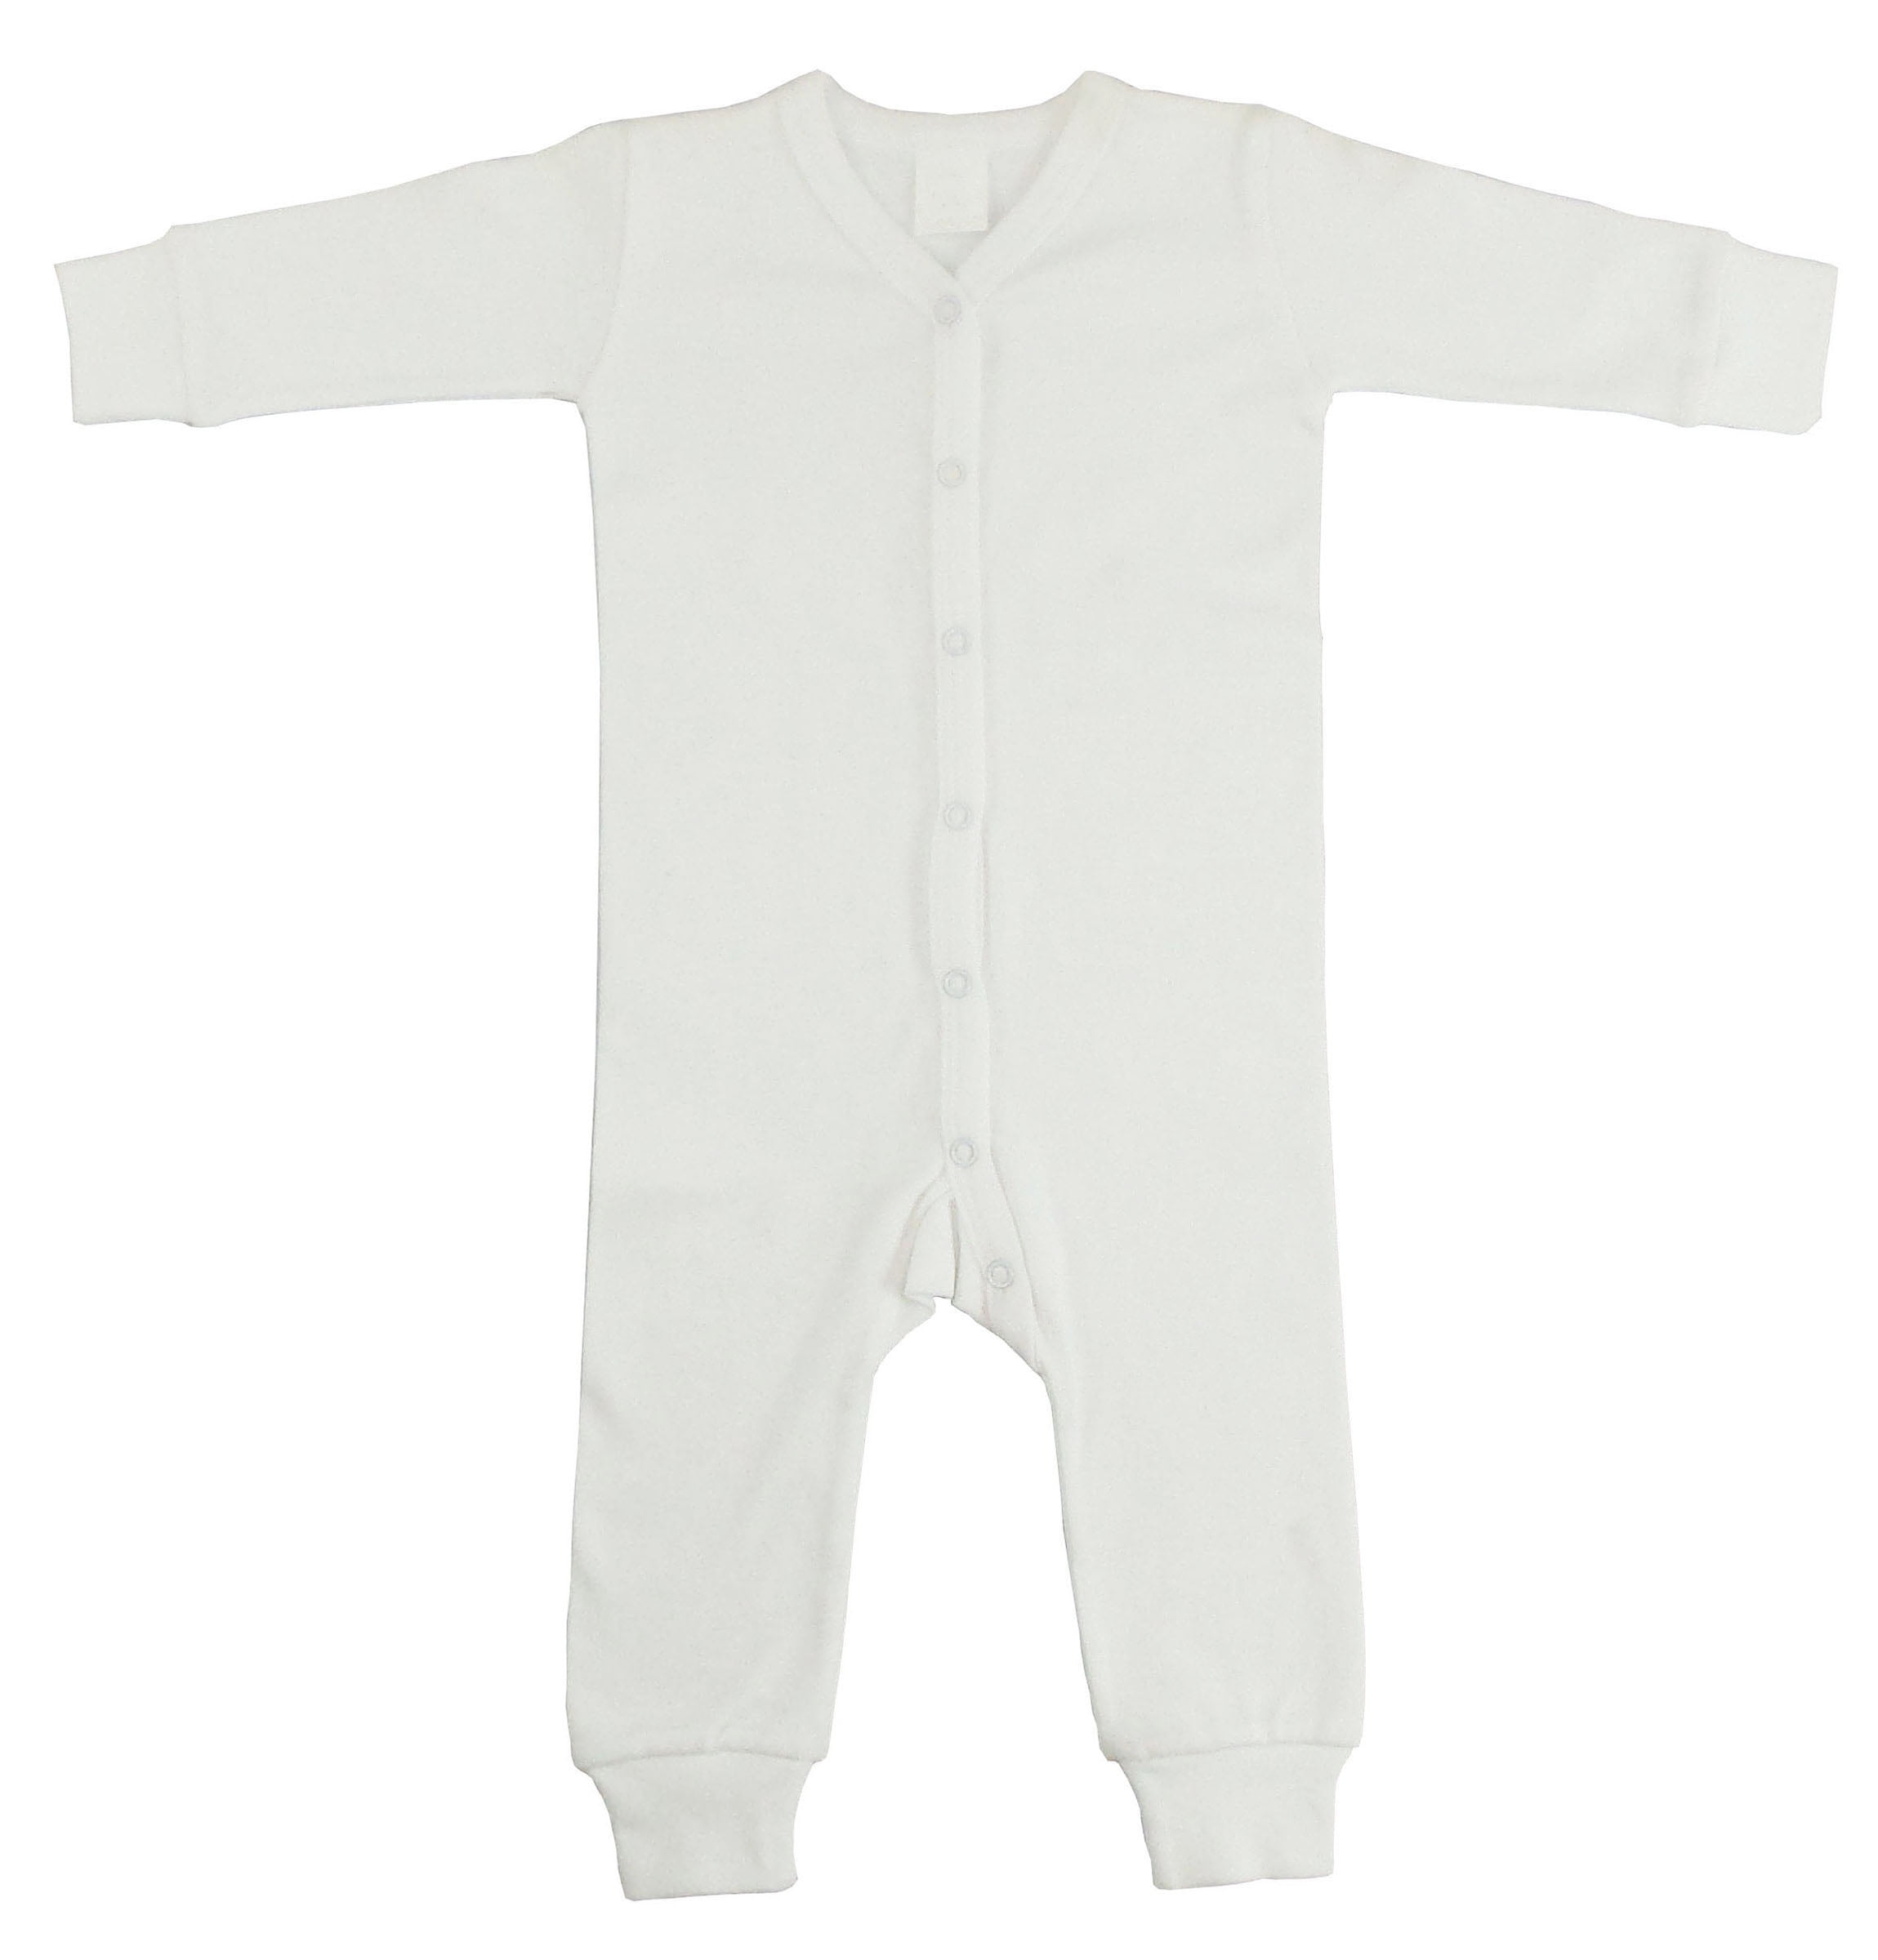 Interlock Union Suit Long Johns, White - Newborn